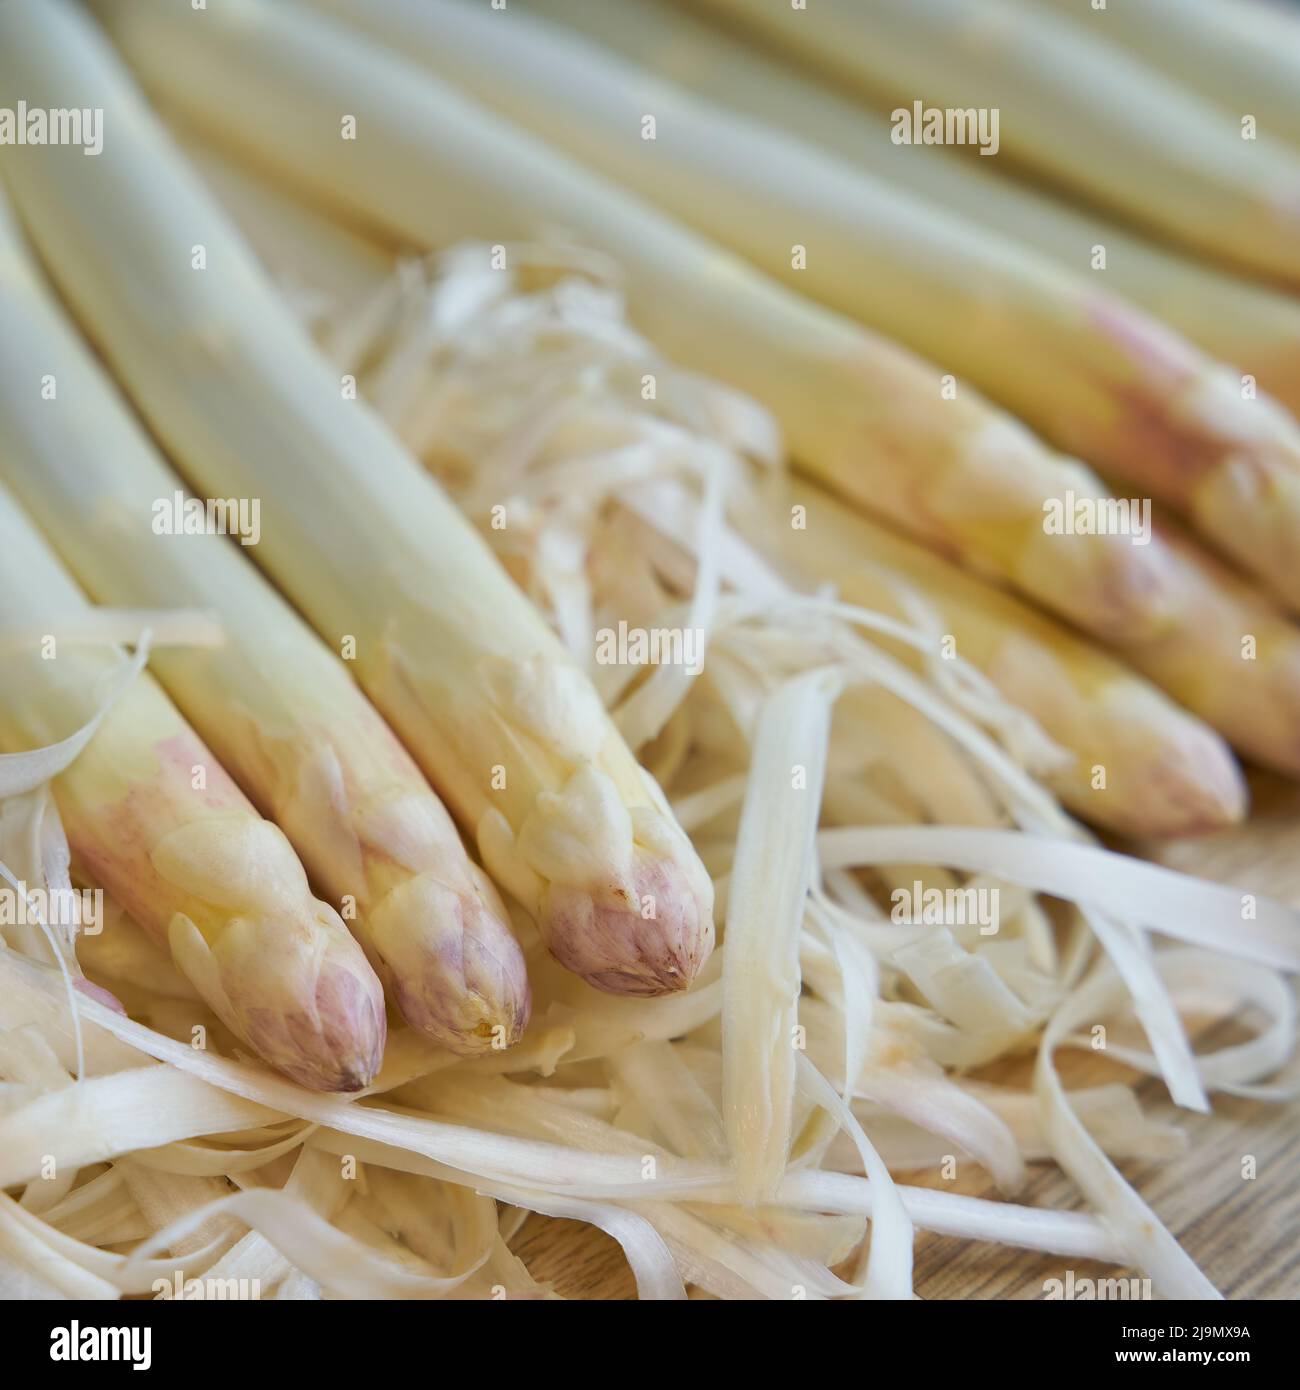 https://c8.alamy.com/comp/2J9MX9A/peeled-white-asparagus-on-a-kitchen-table-2J9MX9A.jpg